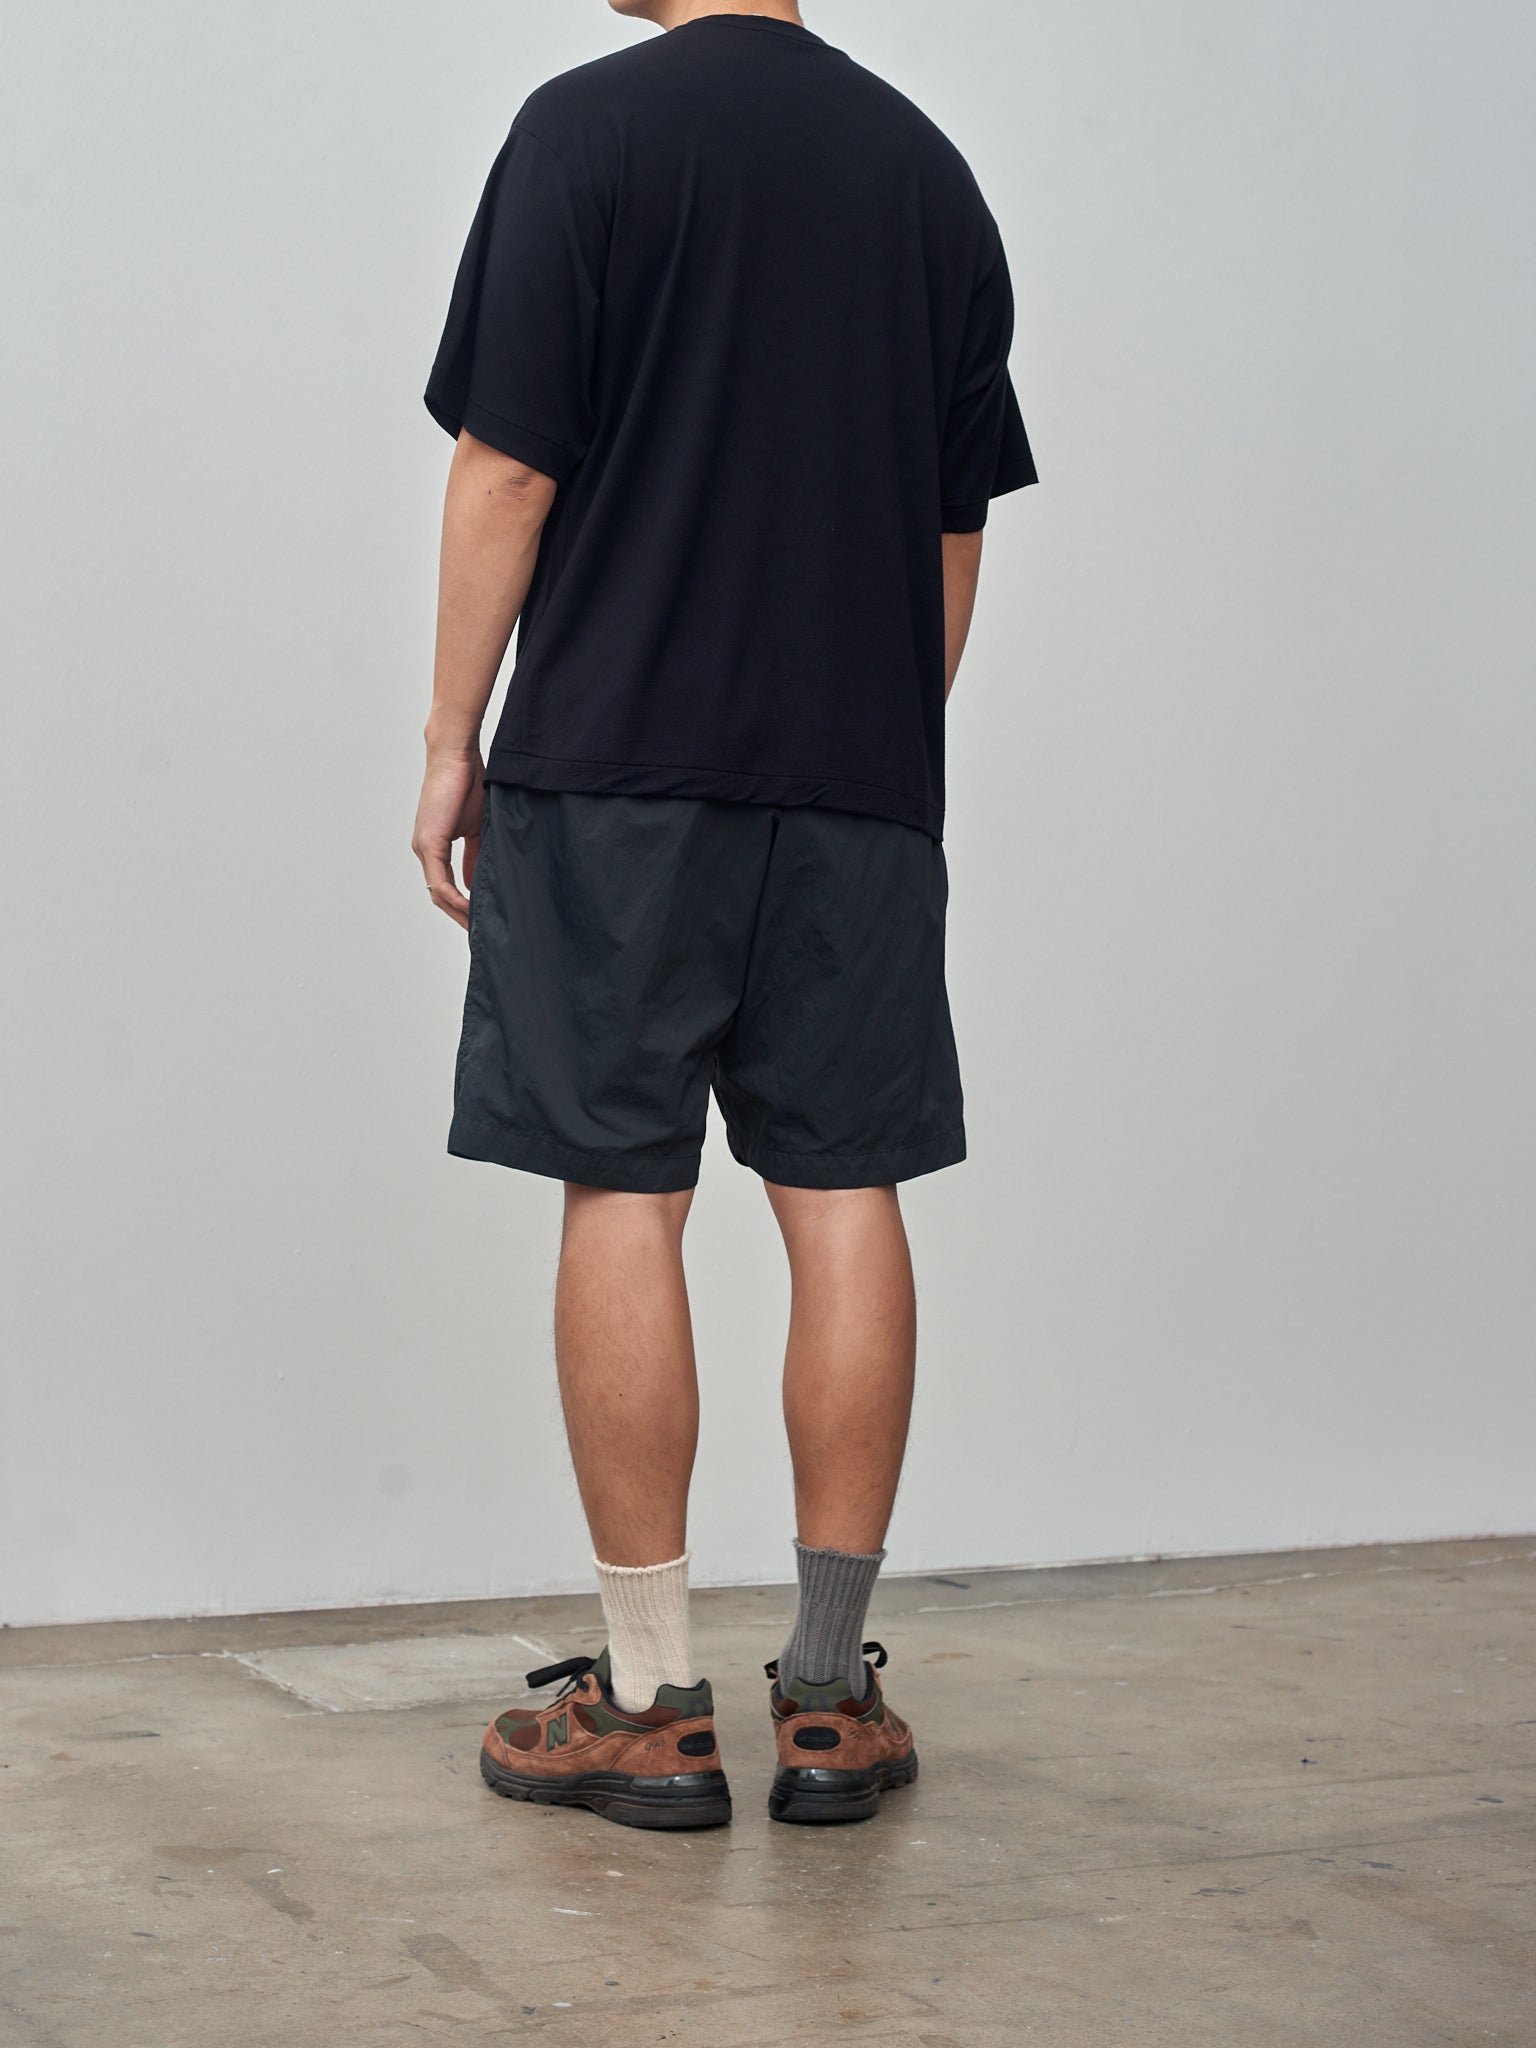 Namu Shop - Kaptain Sunshine Trainer Short Pants - Charcoal